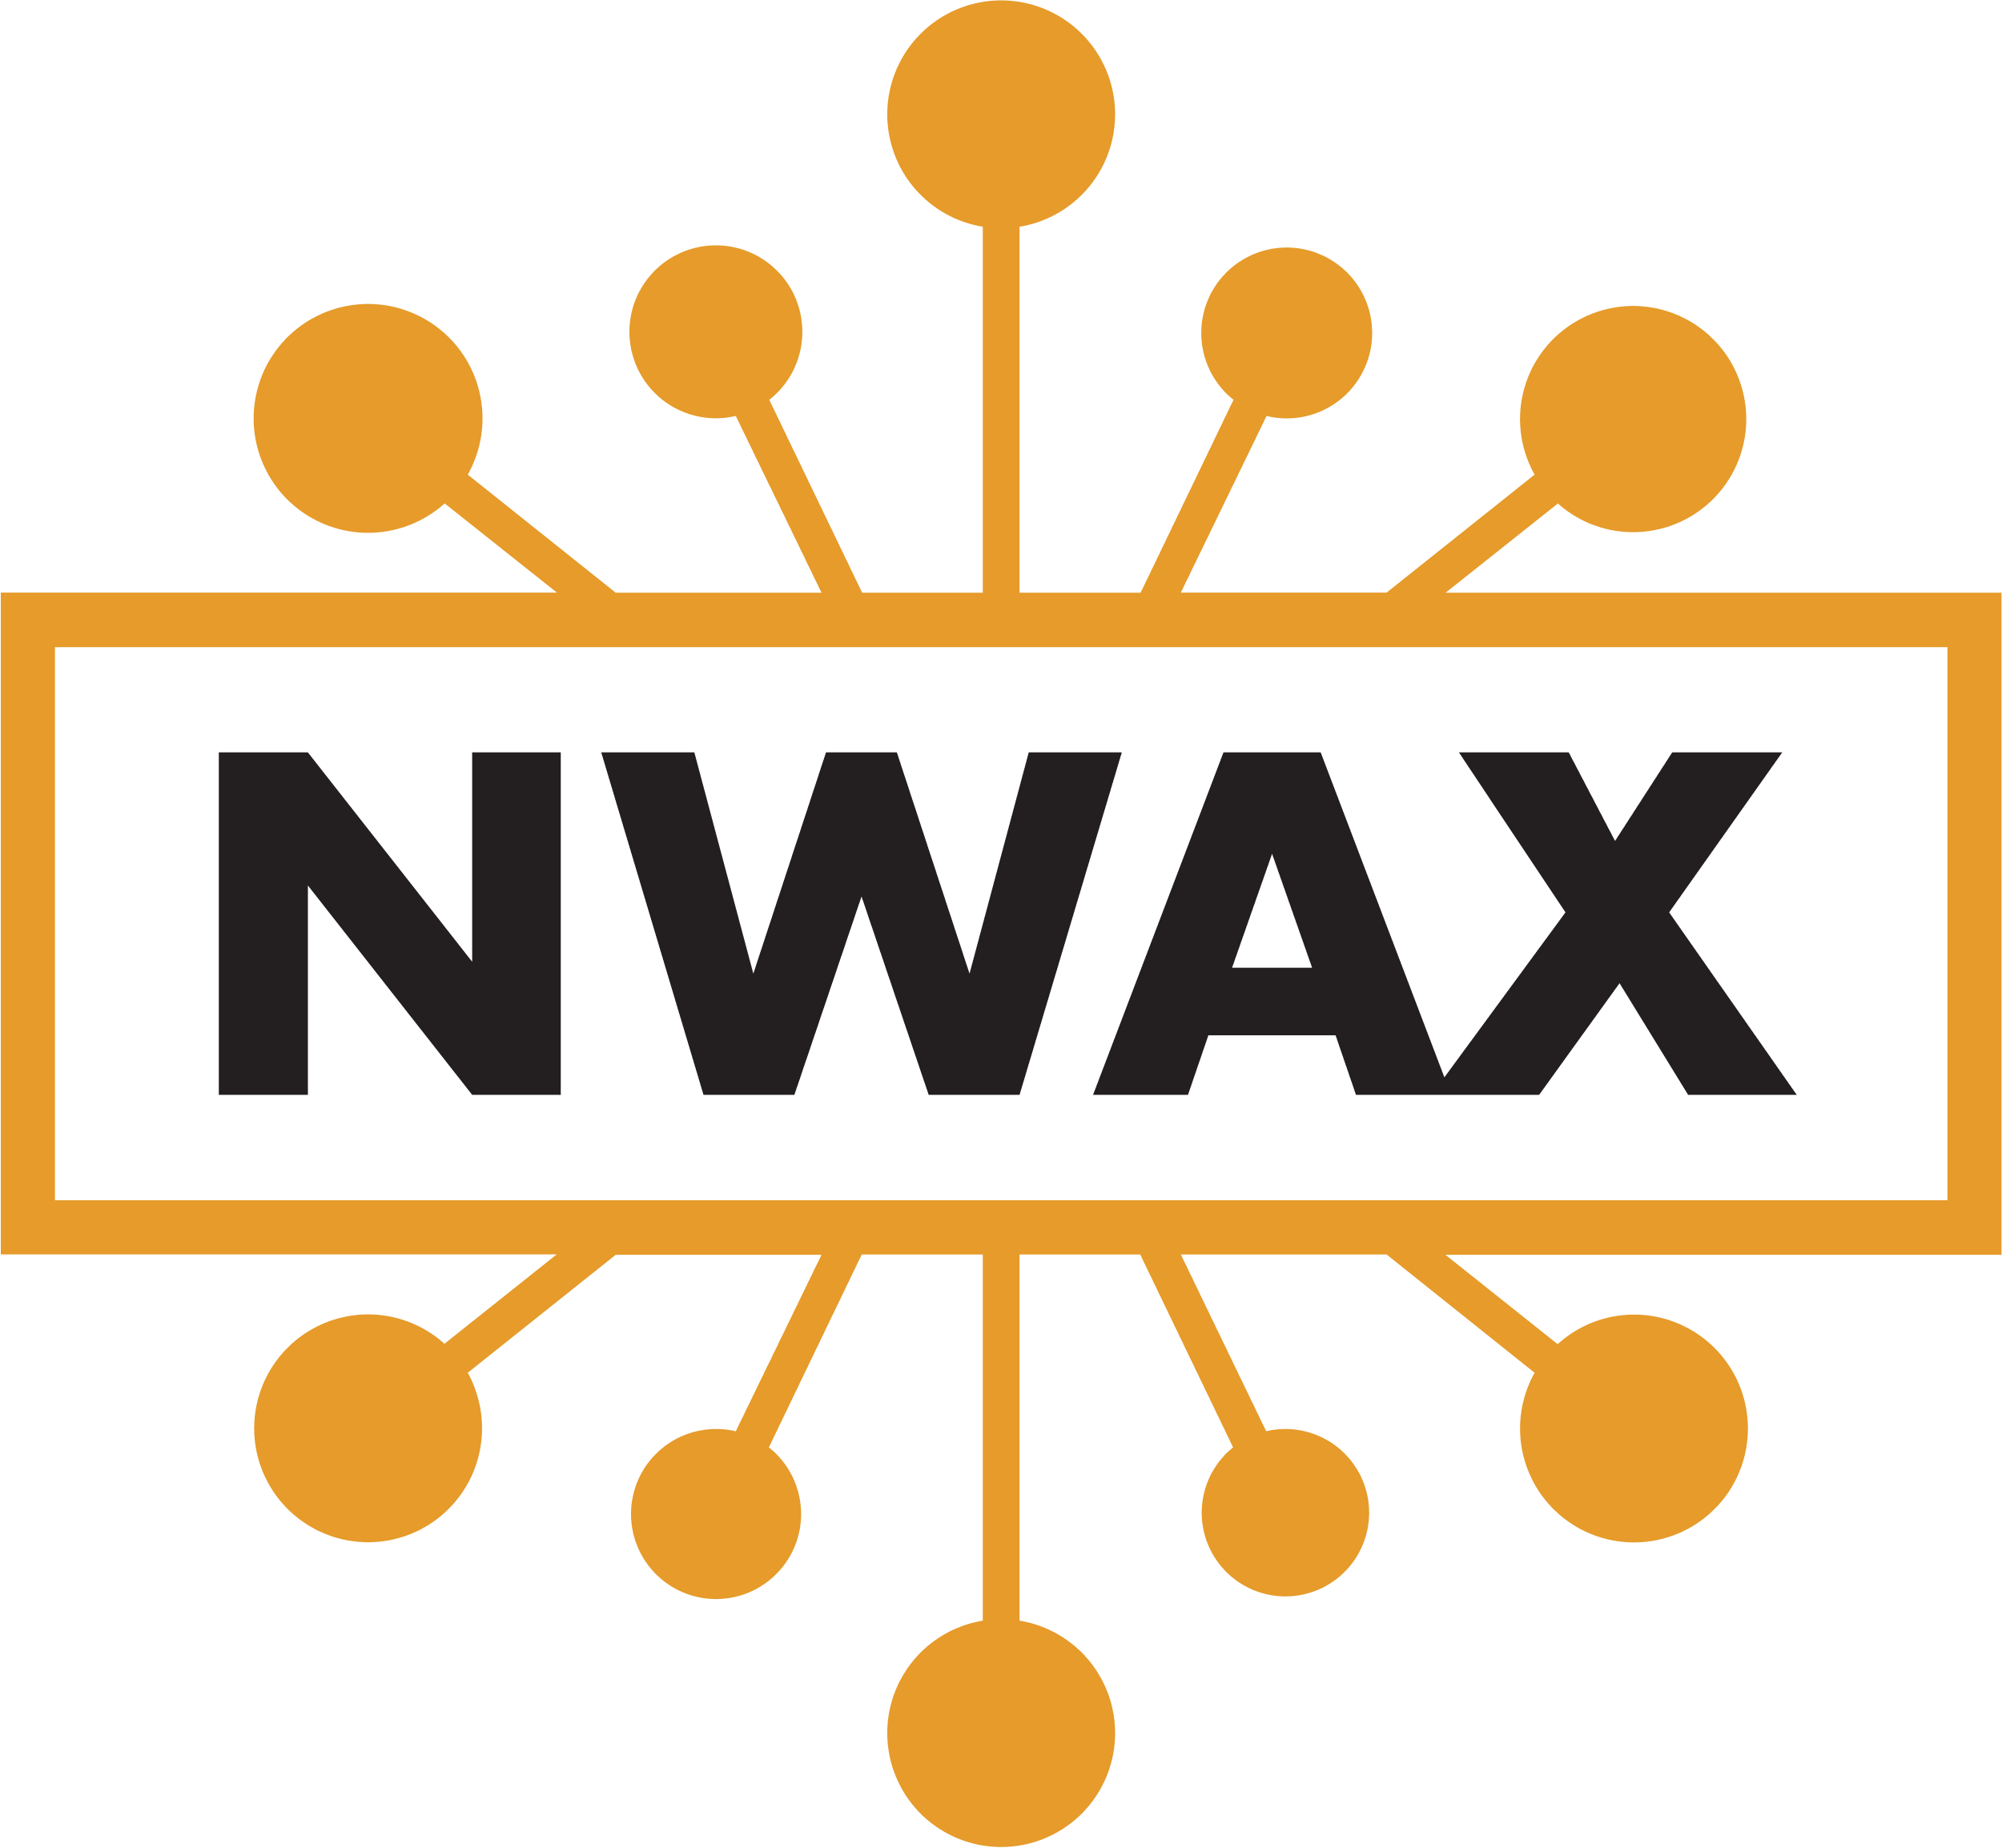 NWAX